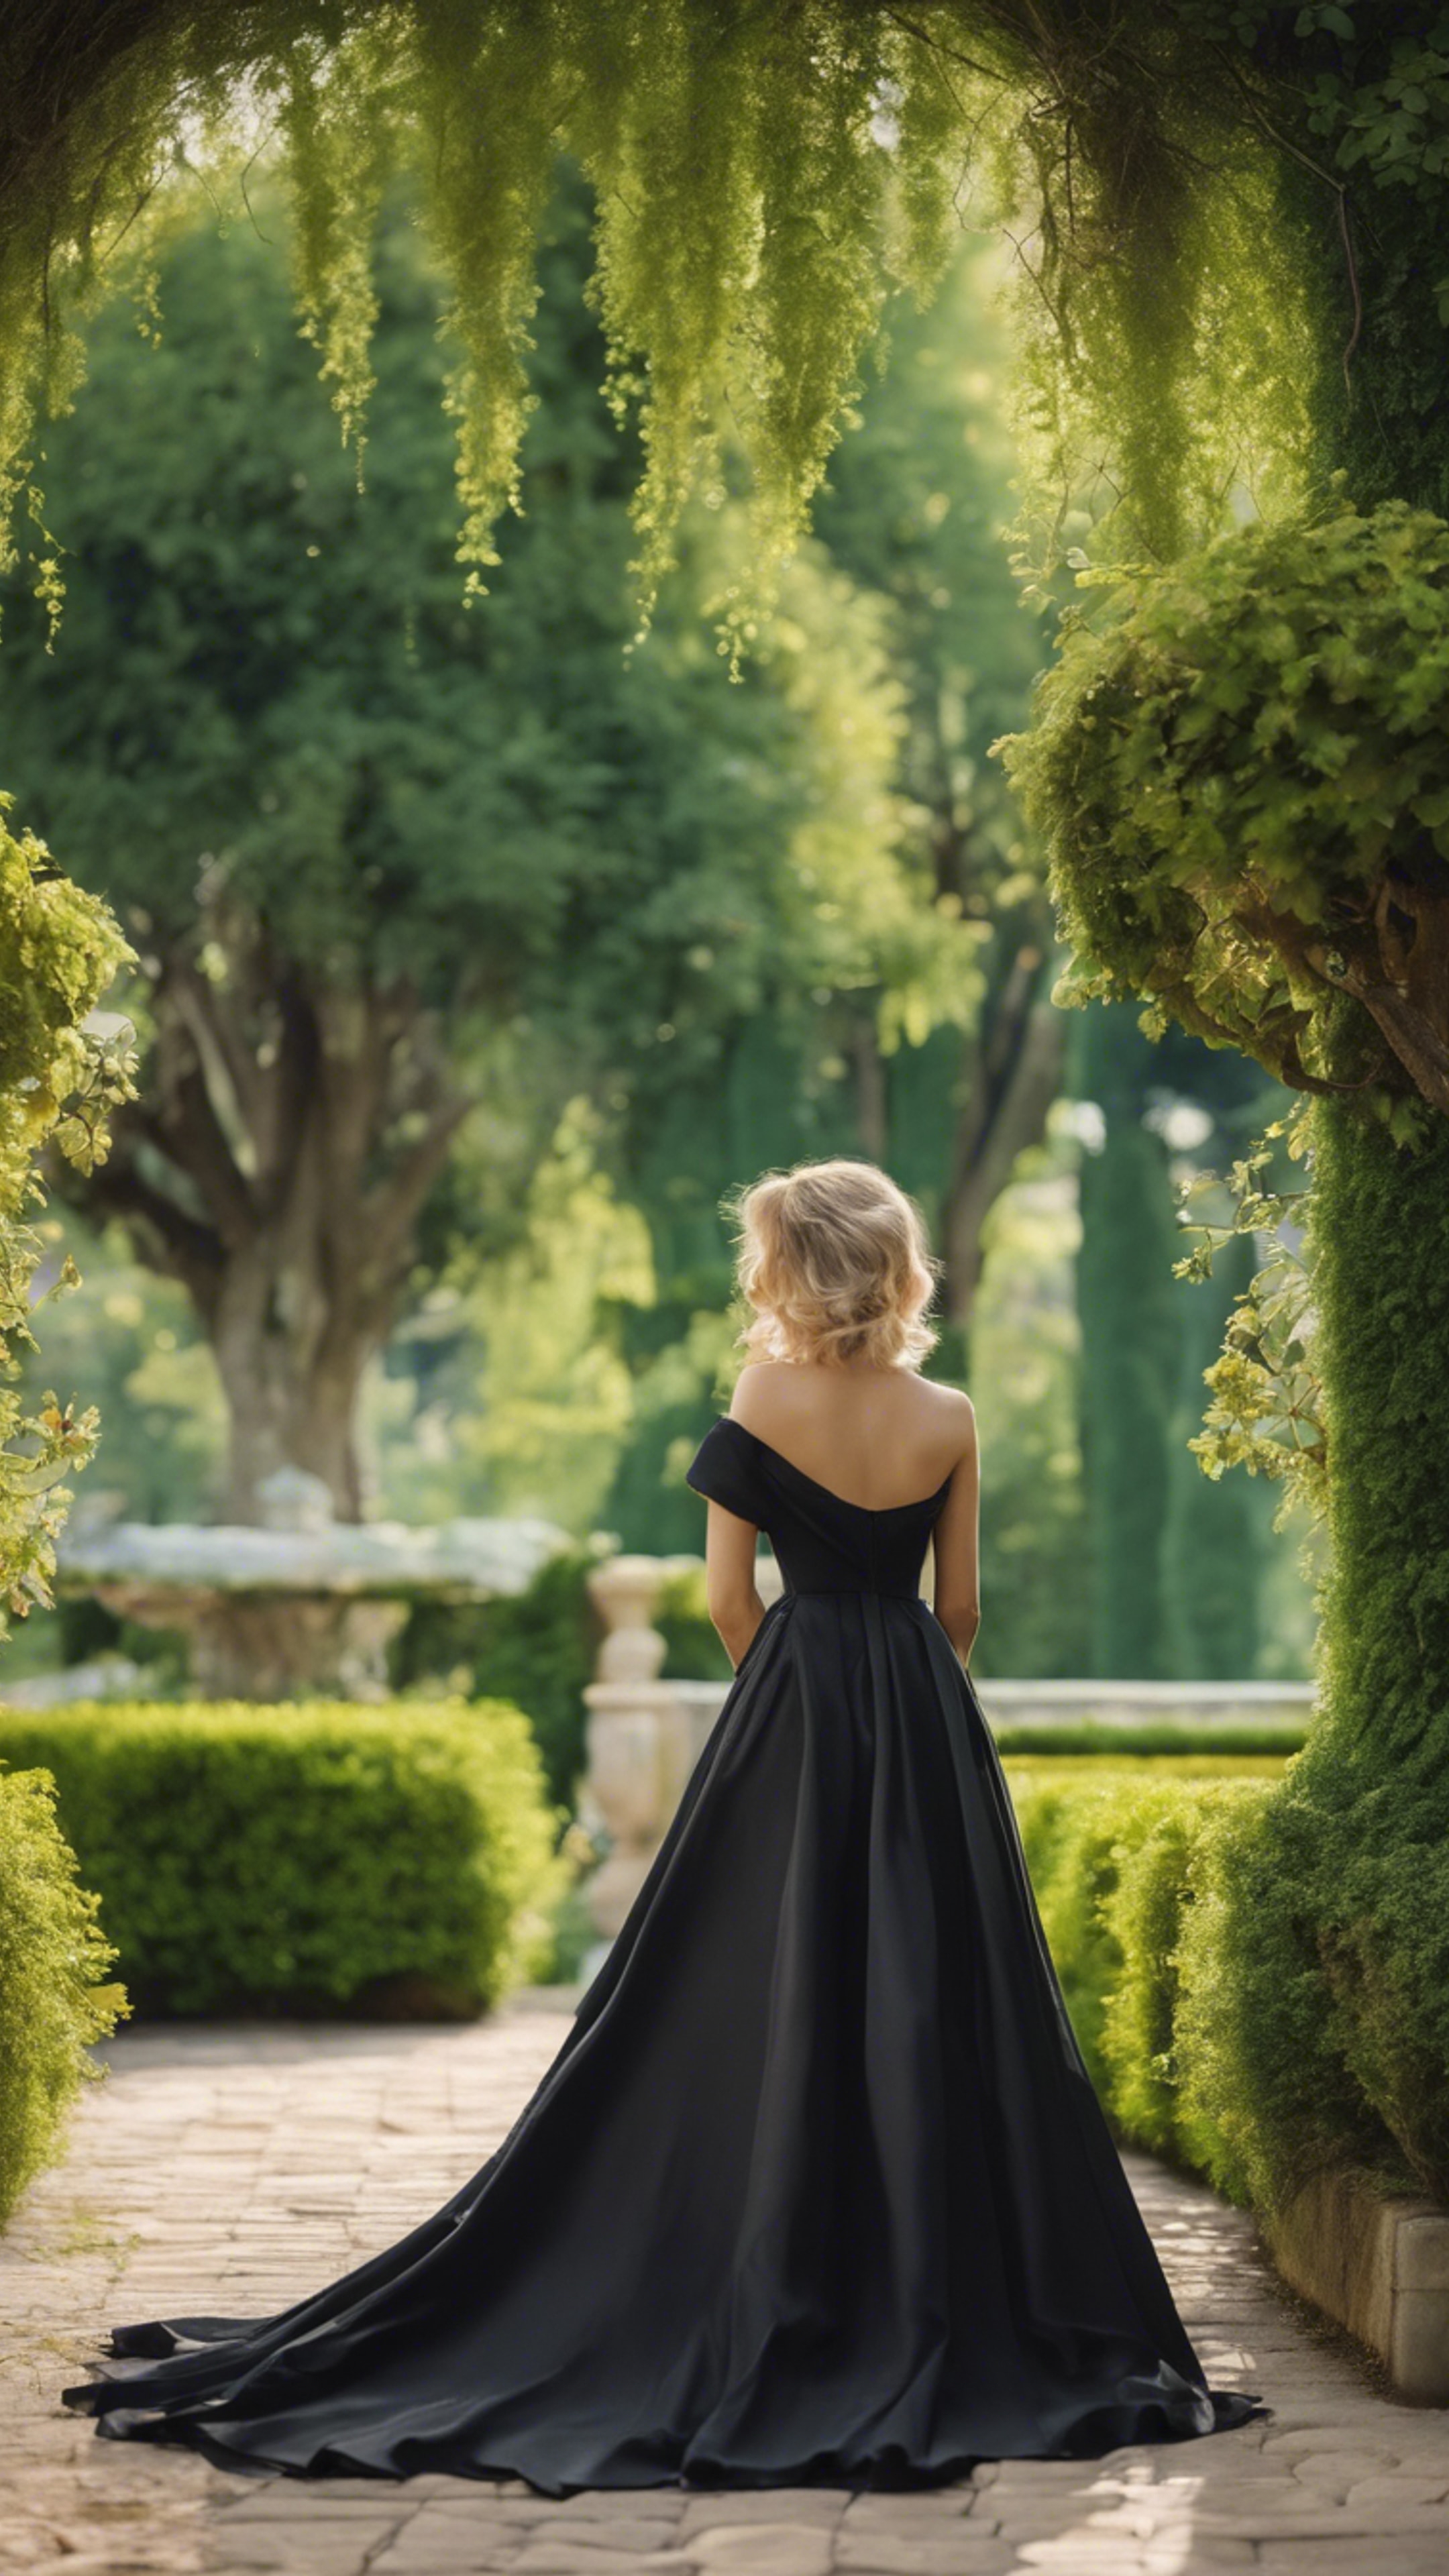 An elegant black frock against a background of sprawling green gardens. Wallpaper[9cc753201e504f9dbf83]